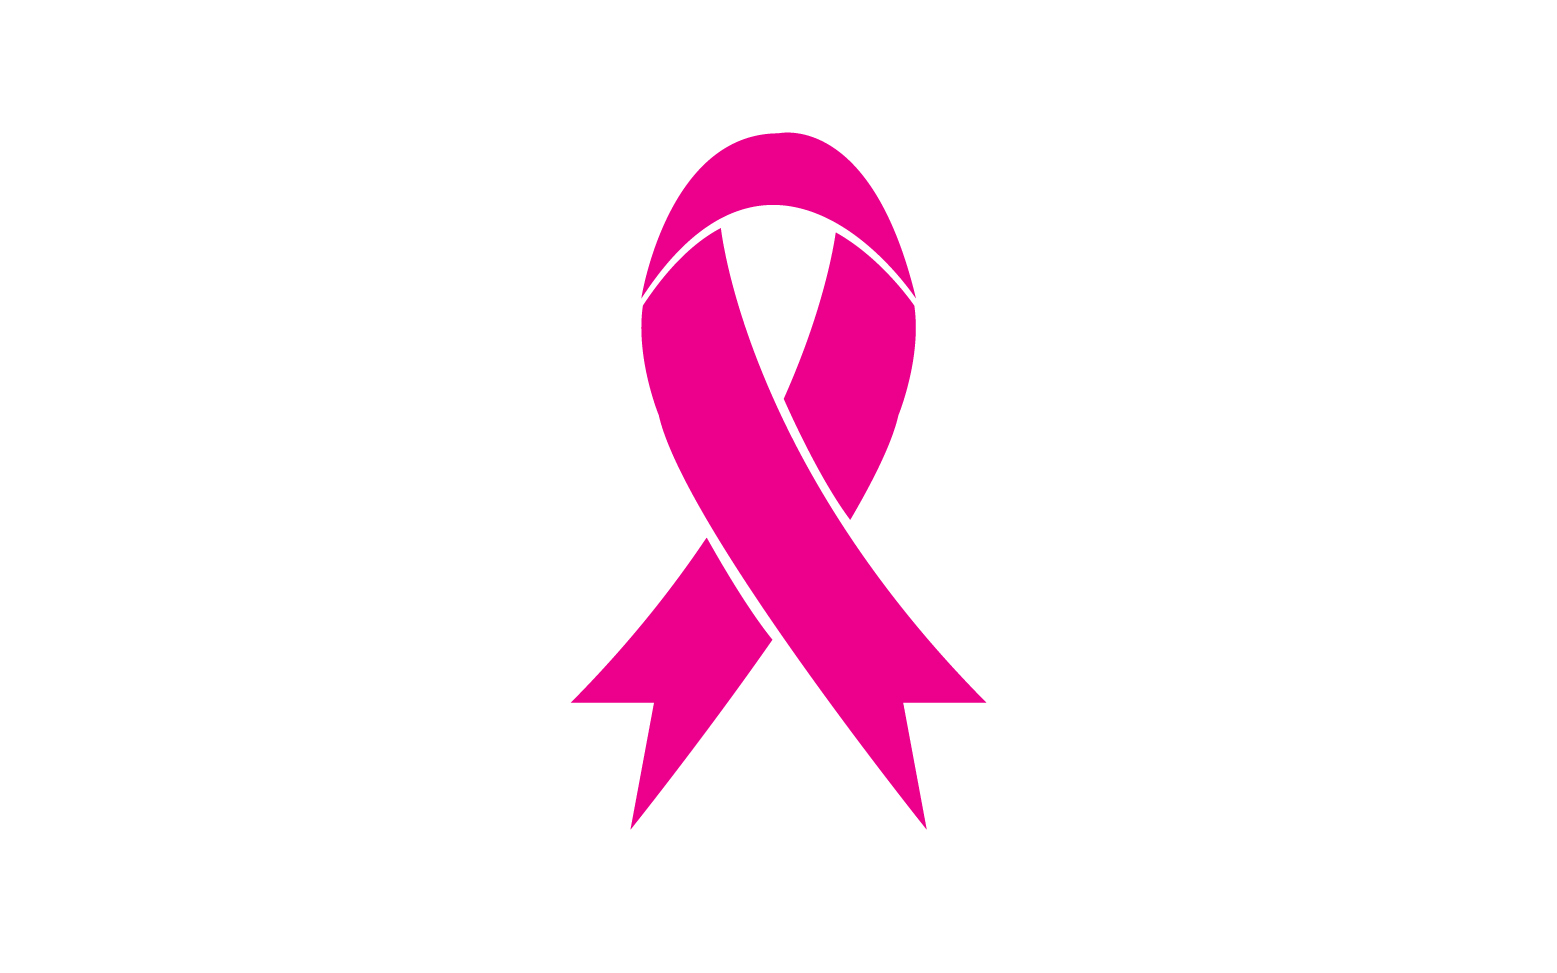 Ribbon pink icon logo element version v11